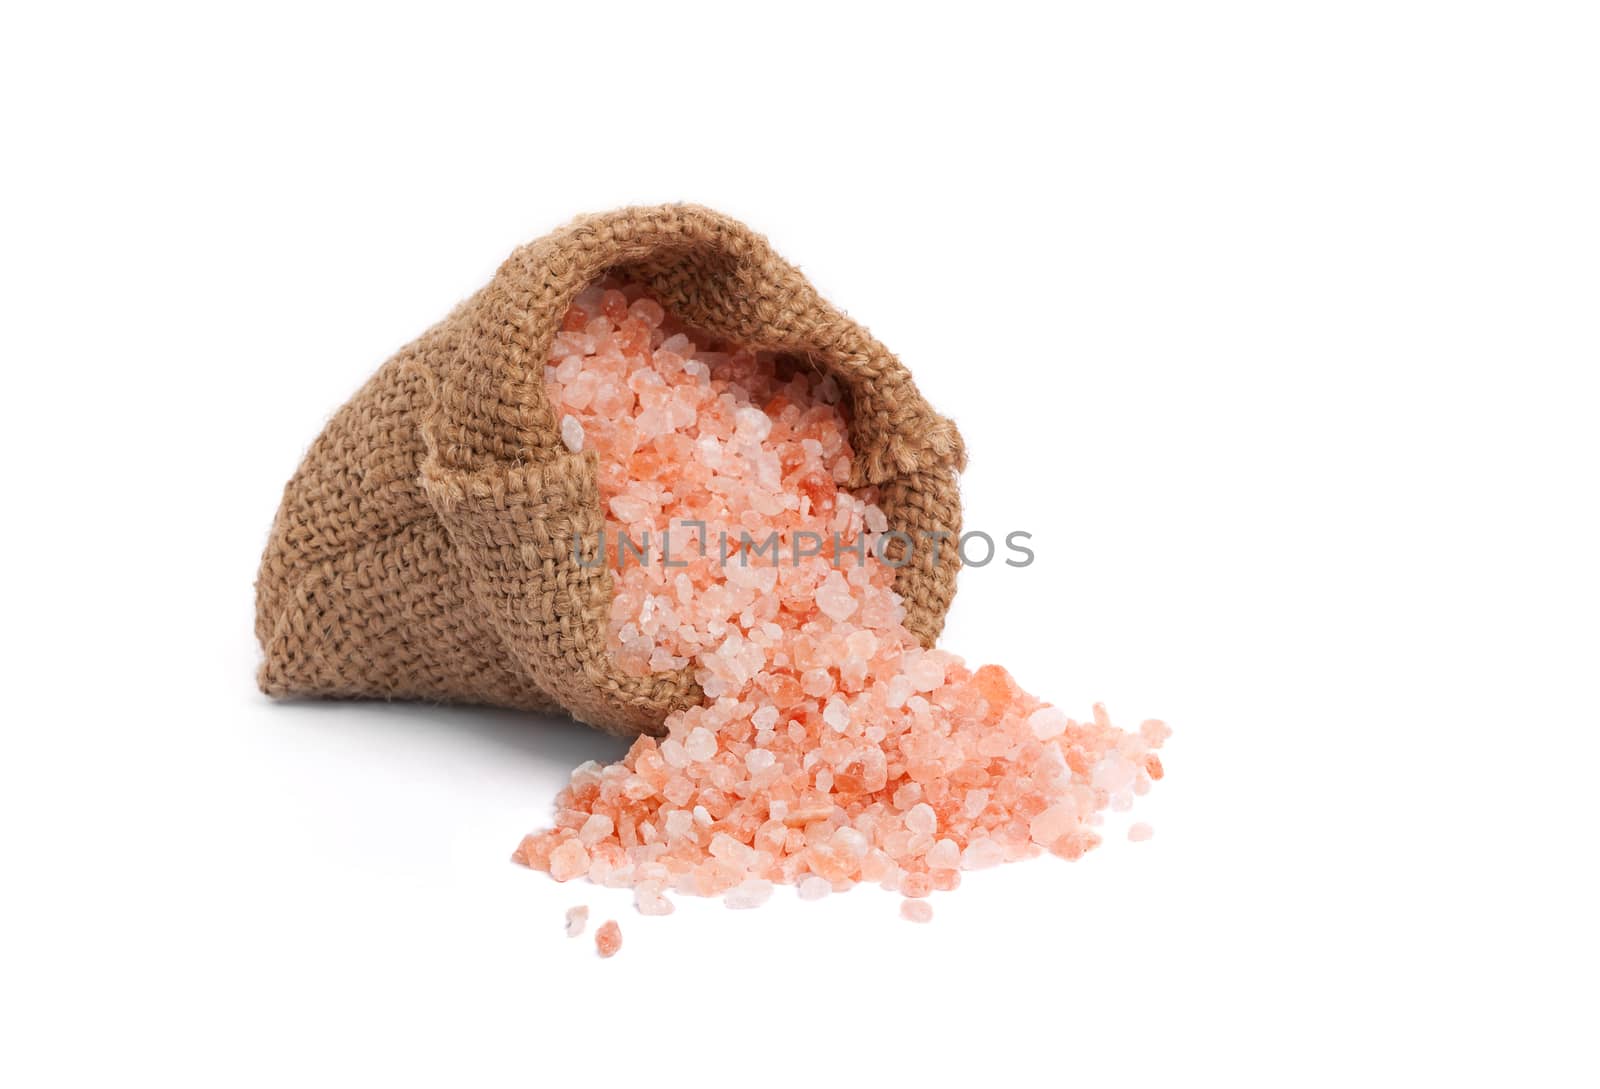 Himalaya pink salt in burlap bag isolated on white